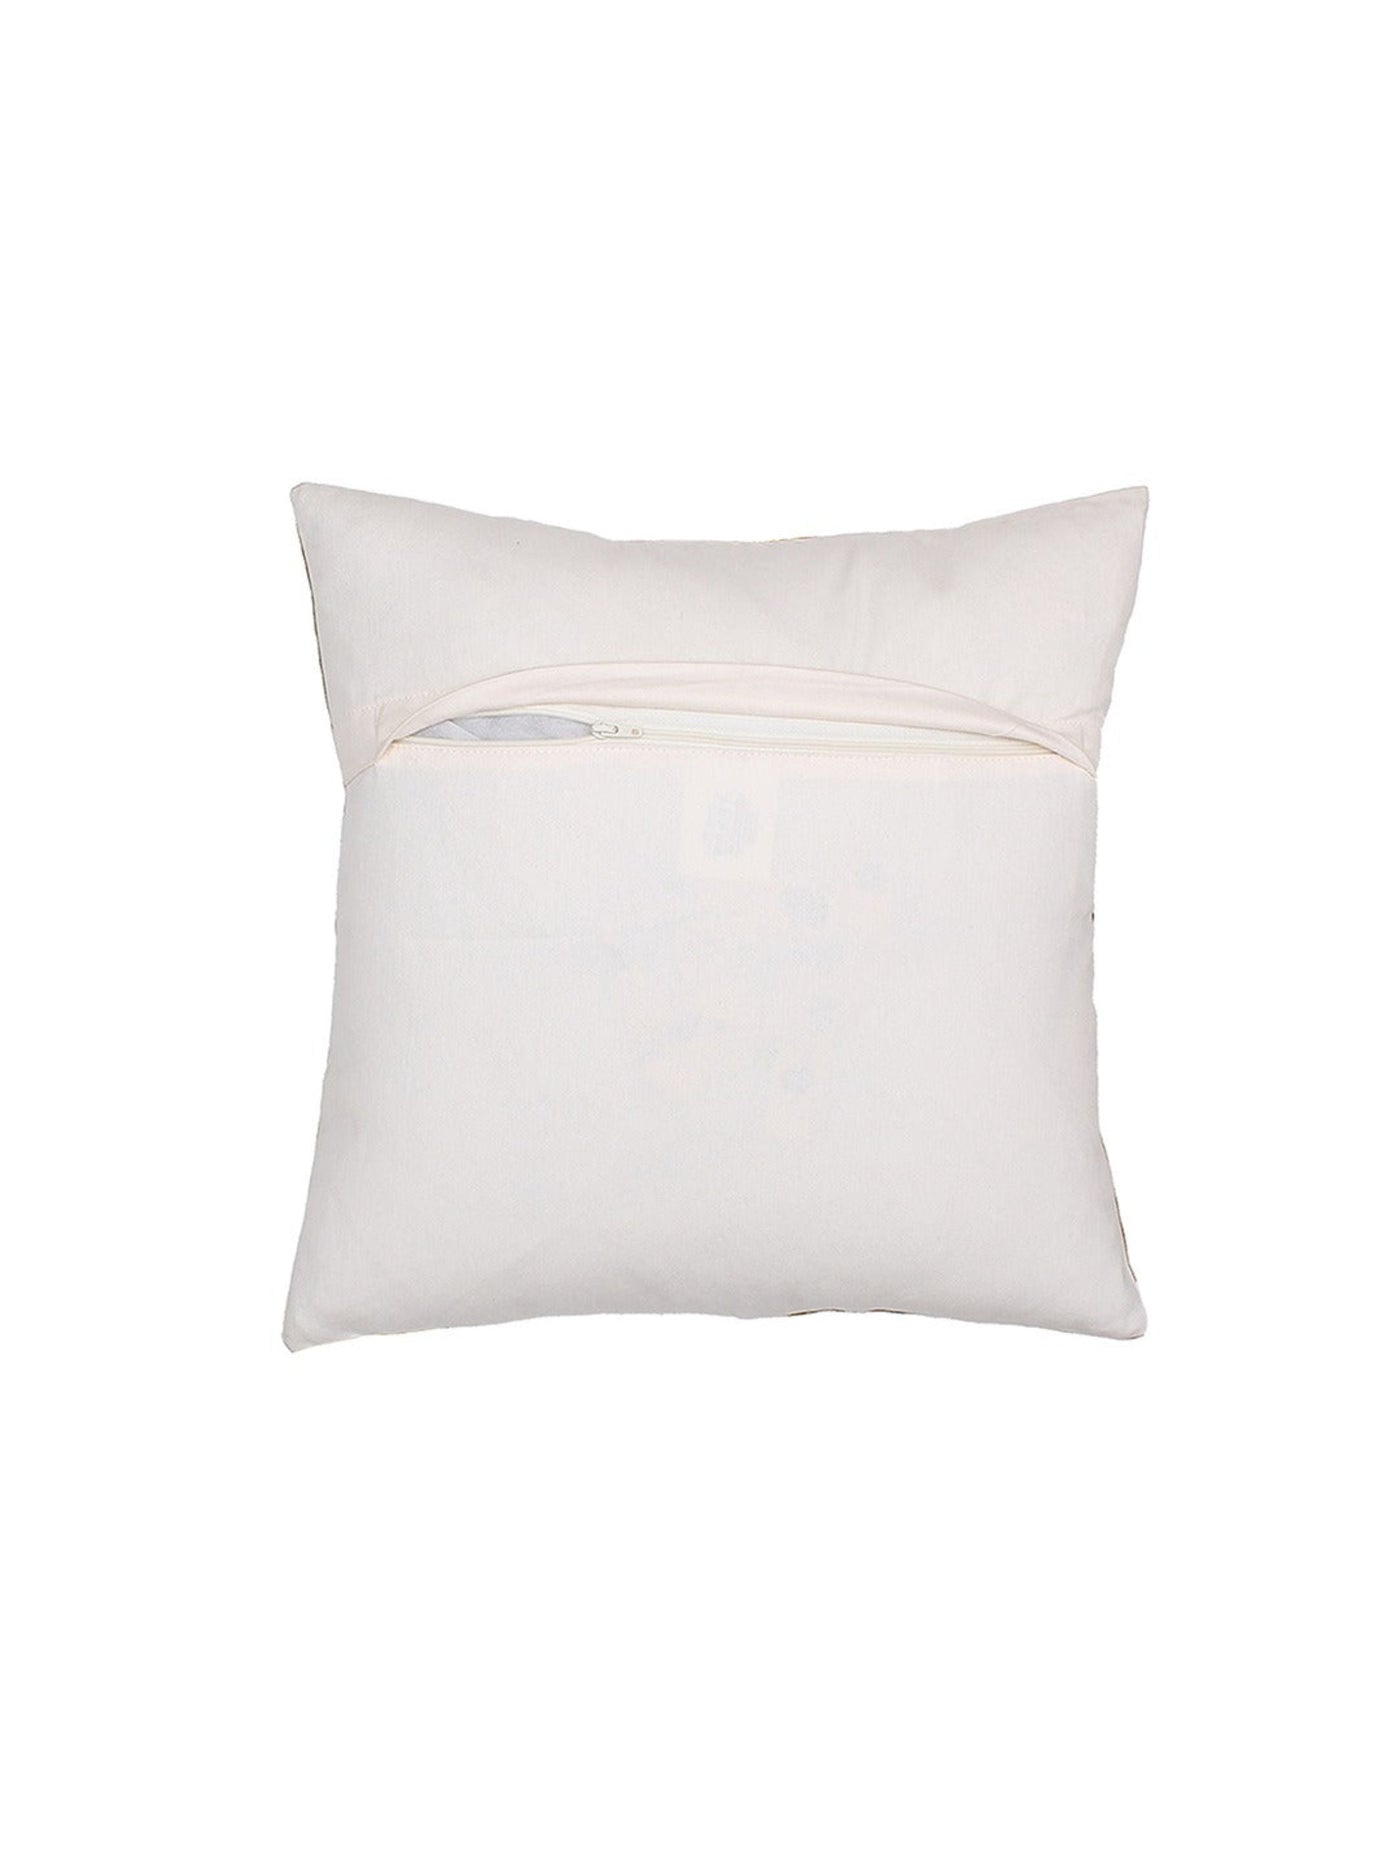 Cushion Cover - Kutch Bakhiya Cotton 2 -Pink-8903773001125